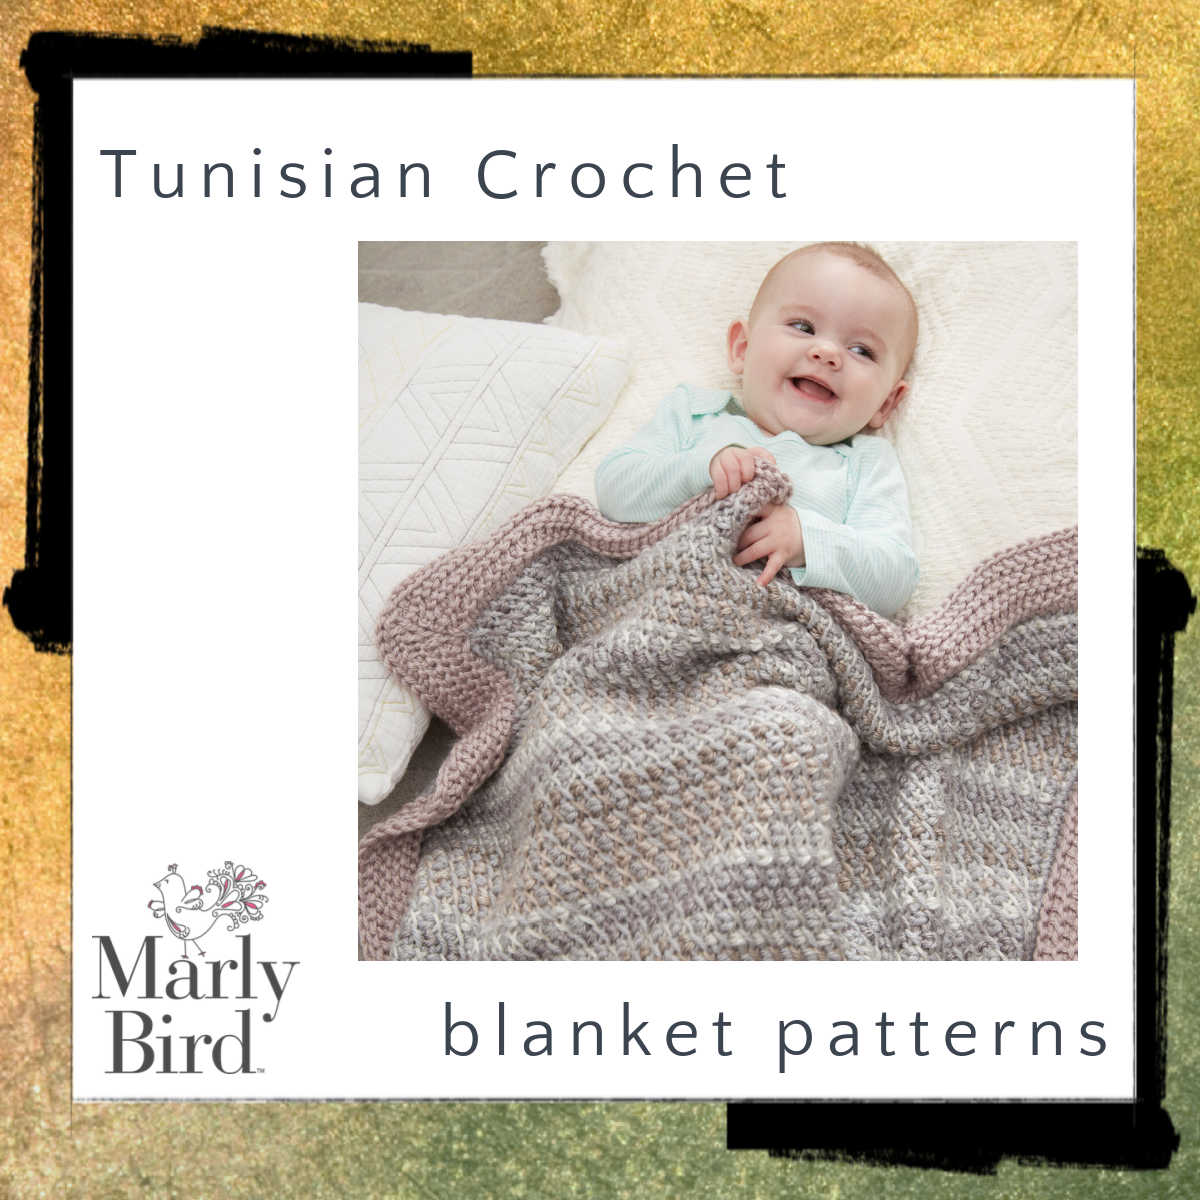 A joyful baby lying under a Tunisian crochet blanket with text overlays stating "Tunisian Crochet Blanket Patterns" and "Marly Bird. -Marly Bird